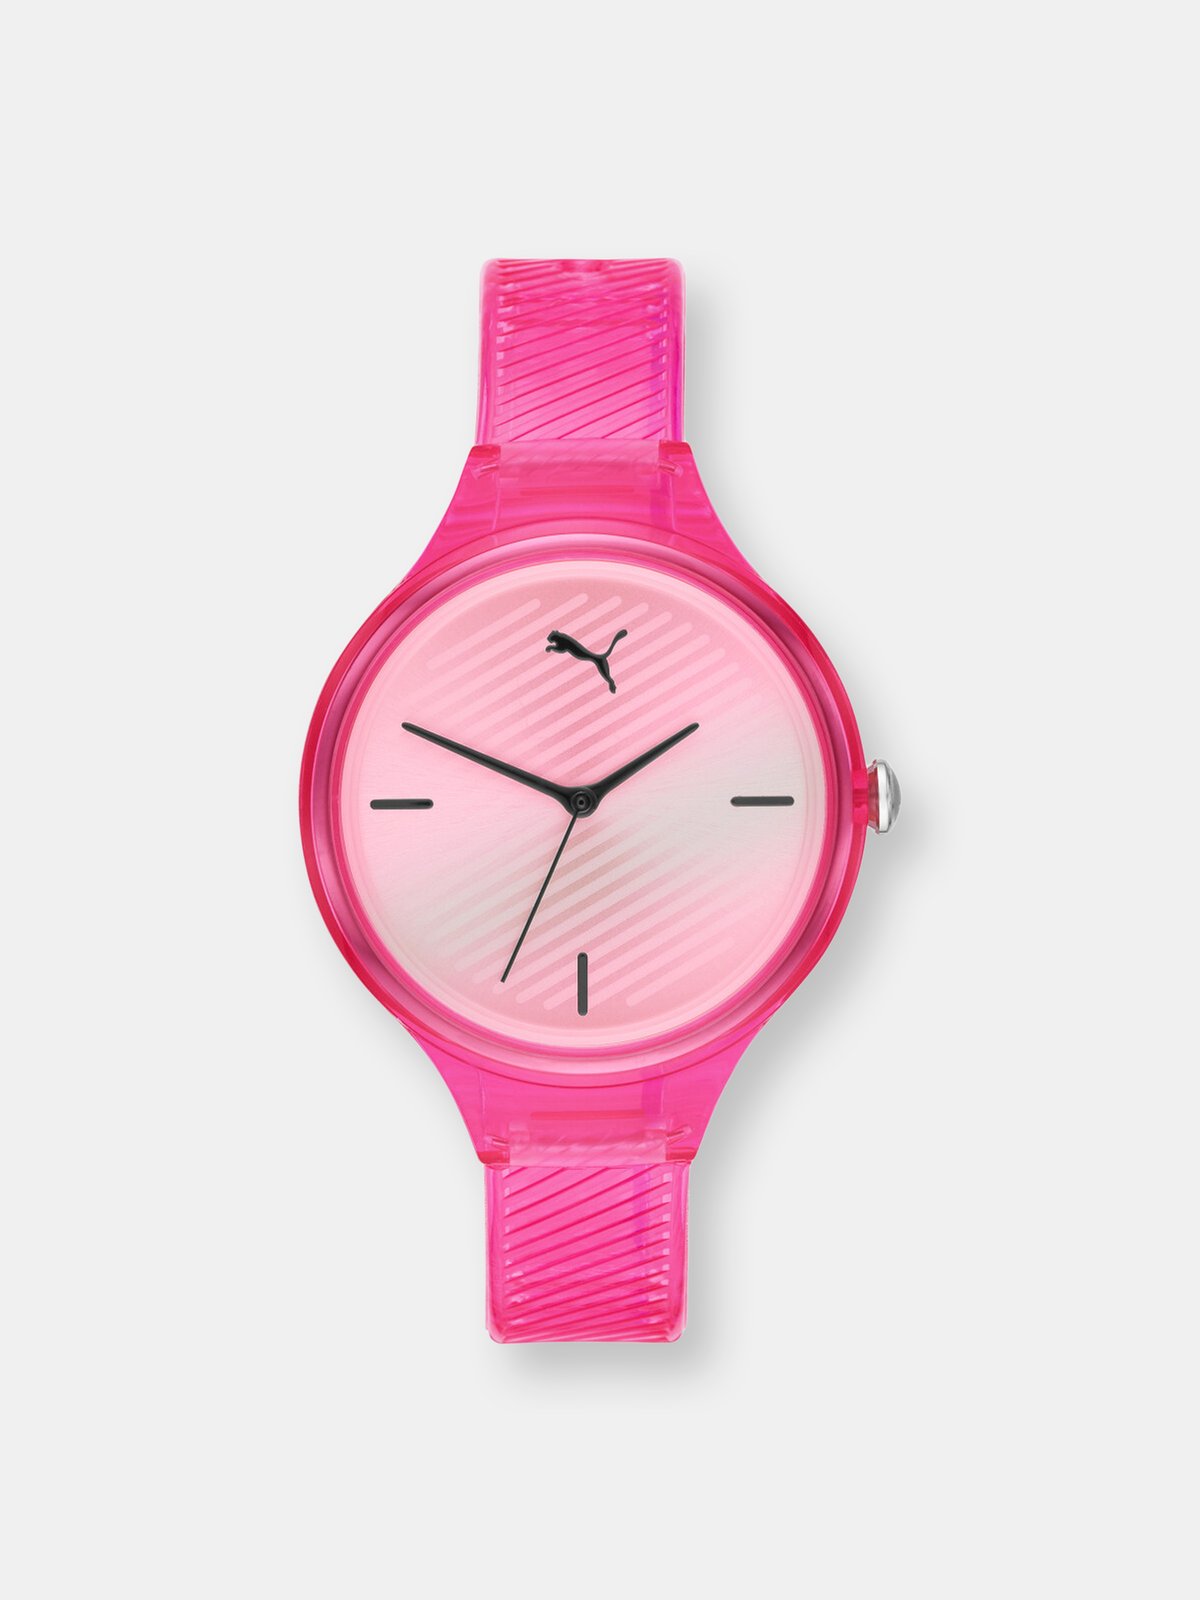 beweeglijkheid Aannames, aannames. Raad eens Donau Puma Pink Women's Contour P1024 Pink Polyurethane Quartz Fashion Watch |  Verishop